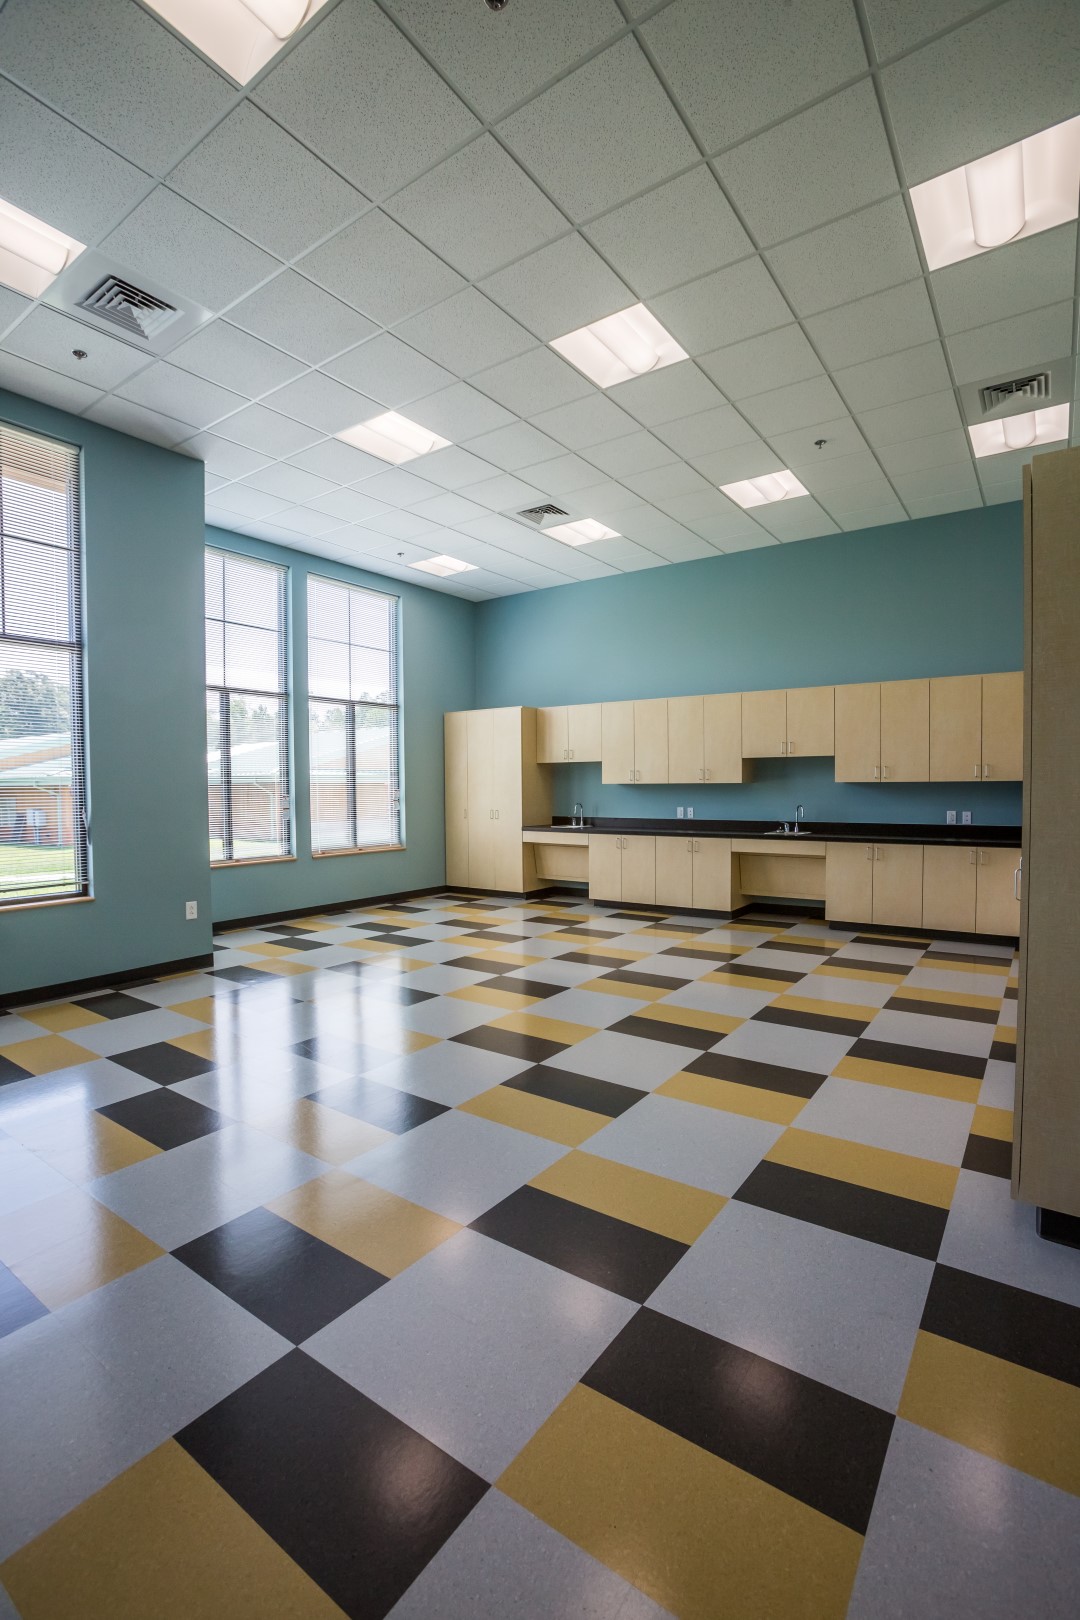 Washington Montessori School colored floor